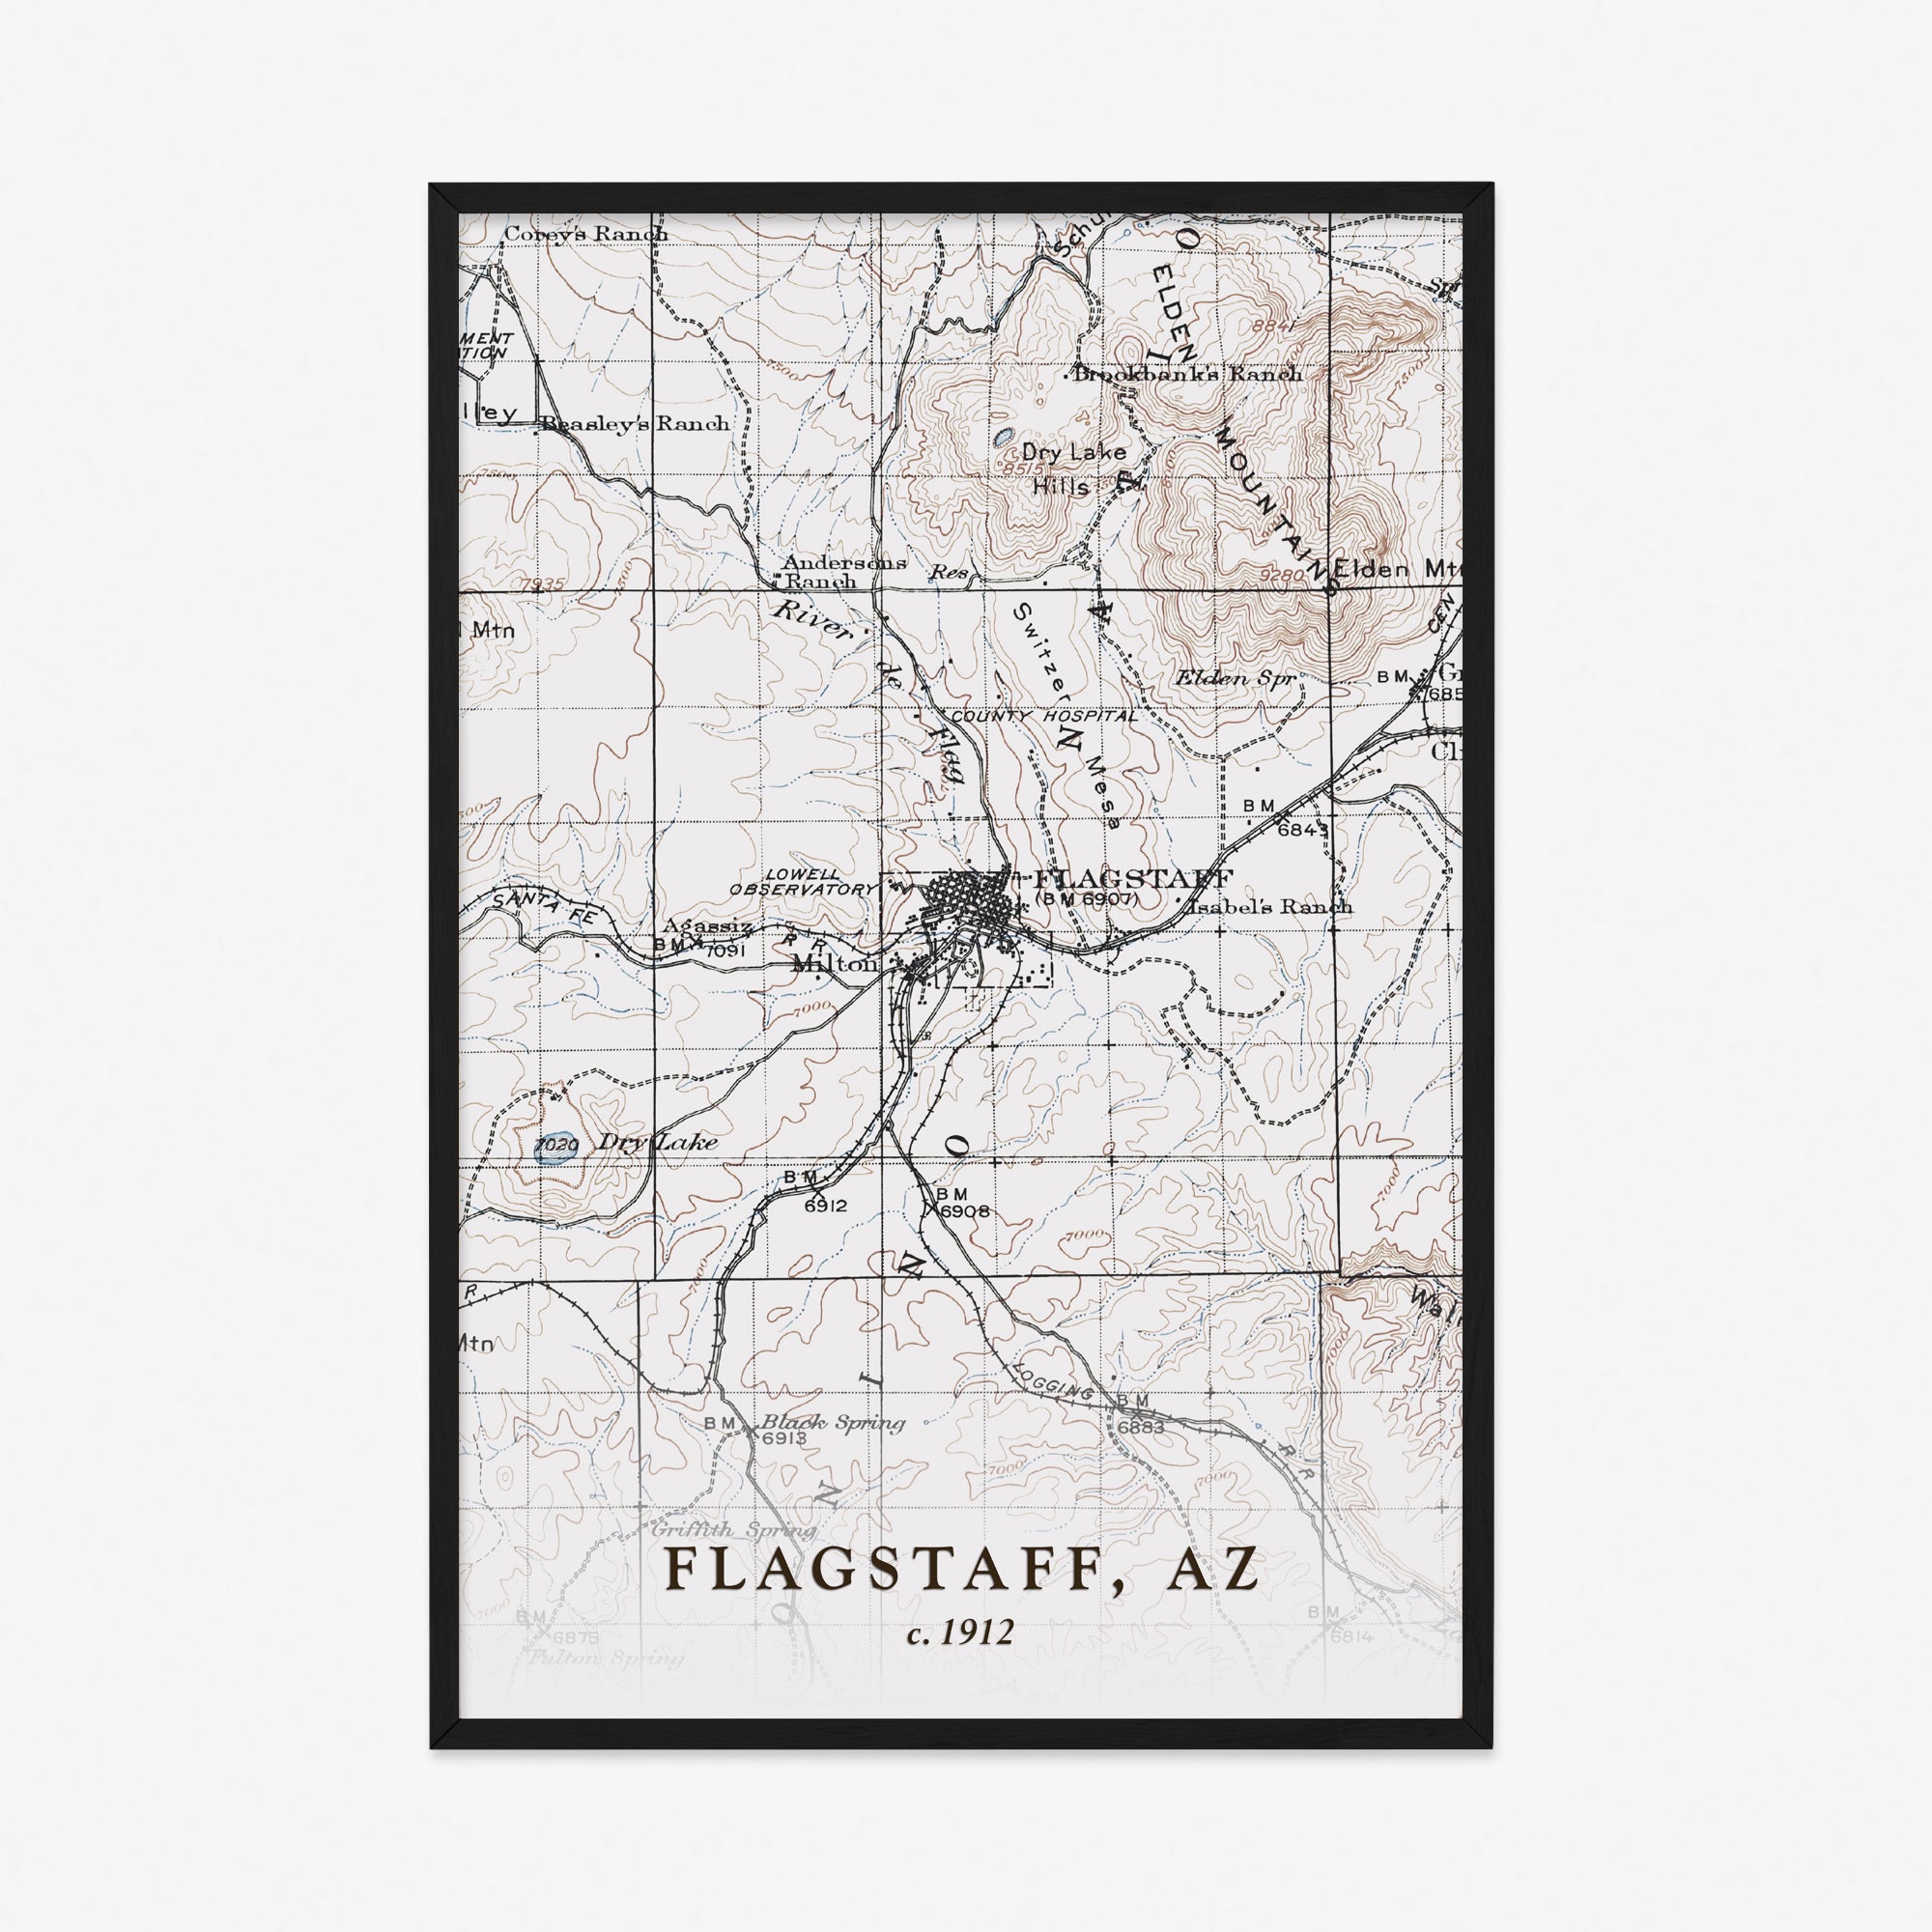 Flagstaff, AZ - 1912 Topographic Map